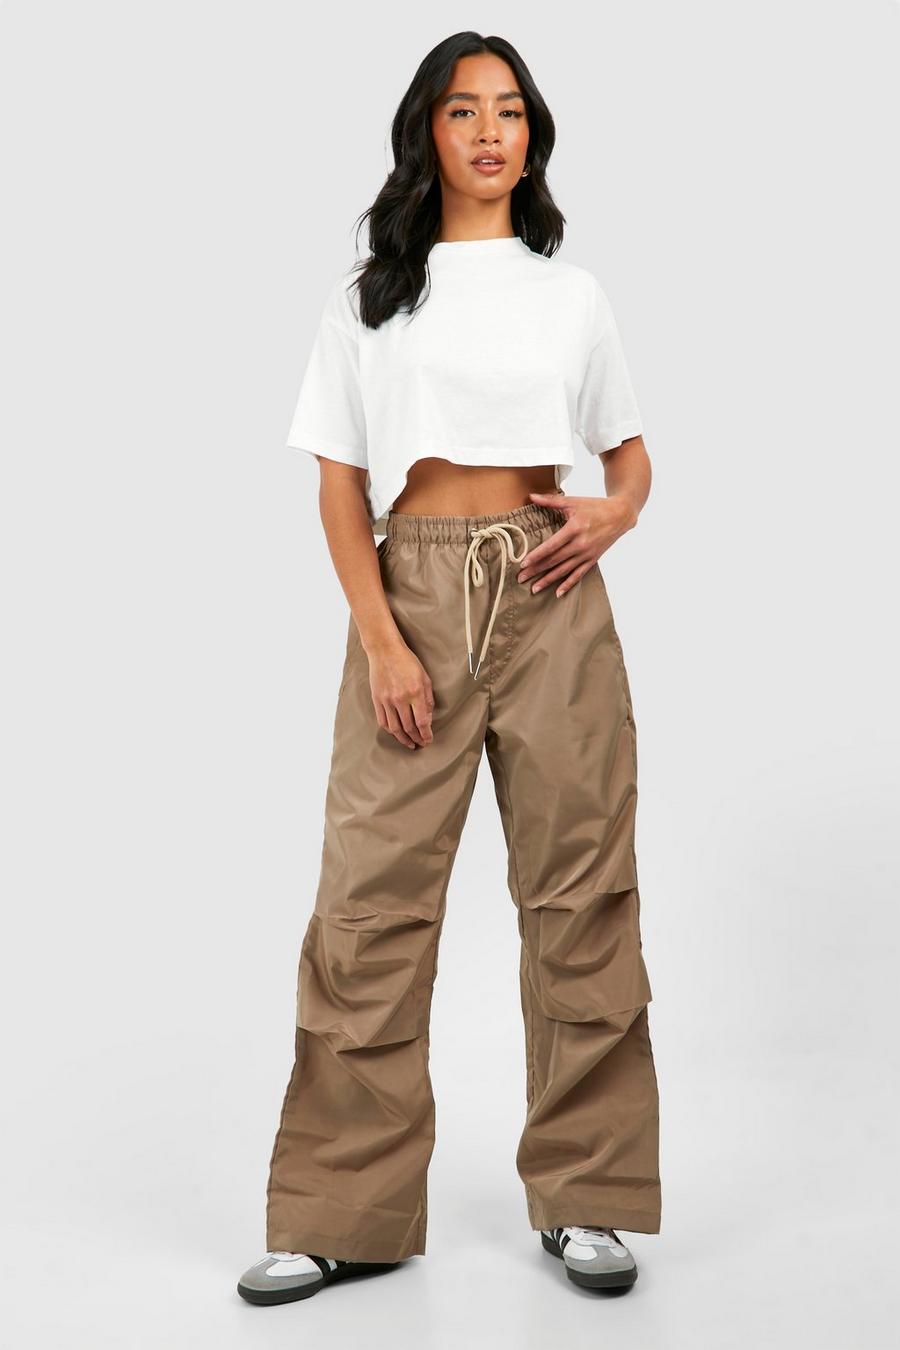 Brown Cargo pants for Women